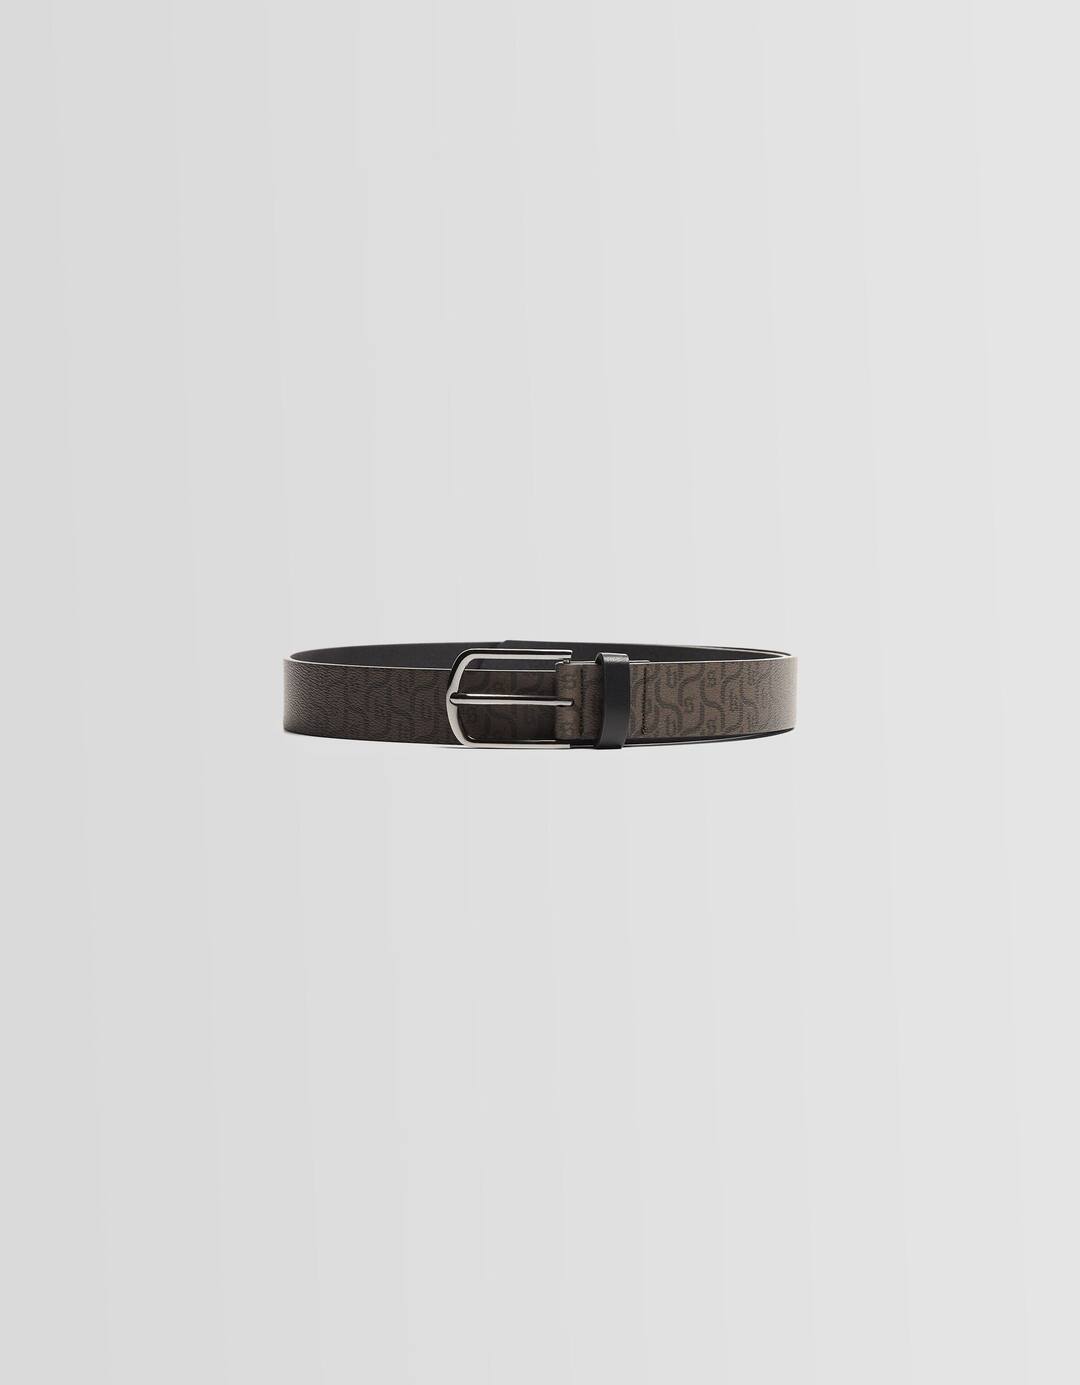 Monochrome belt